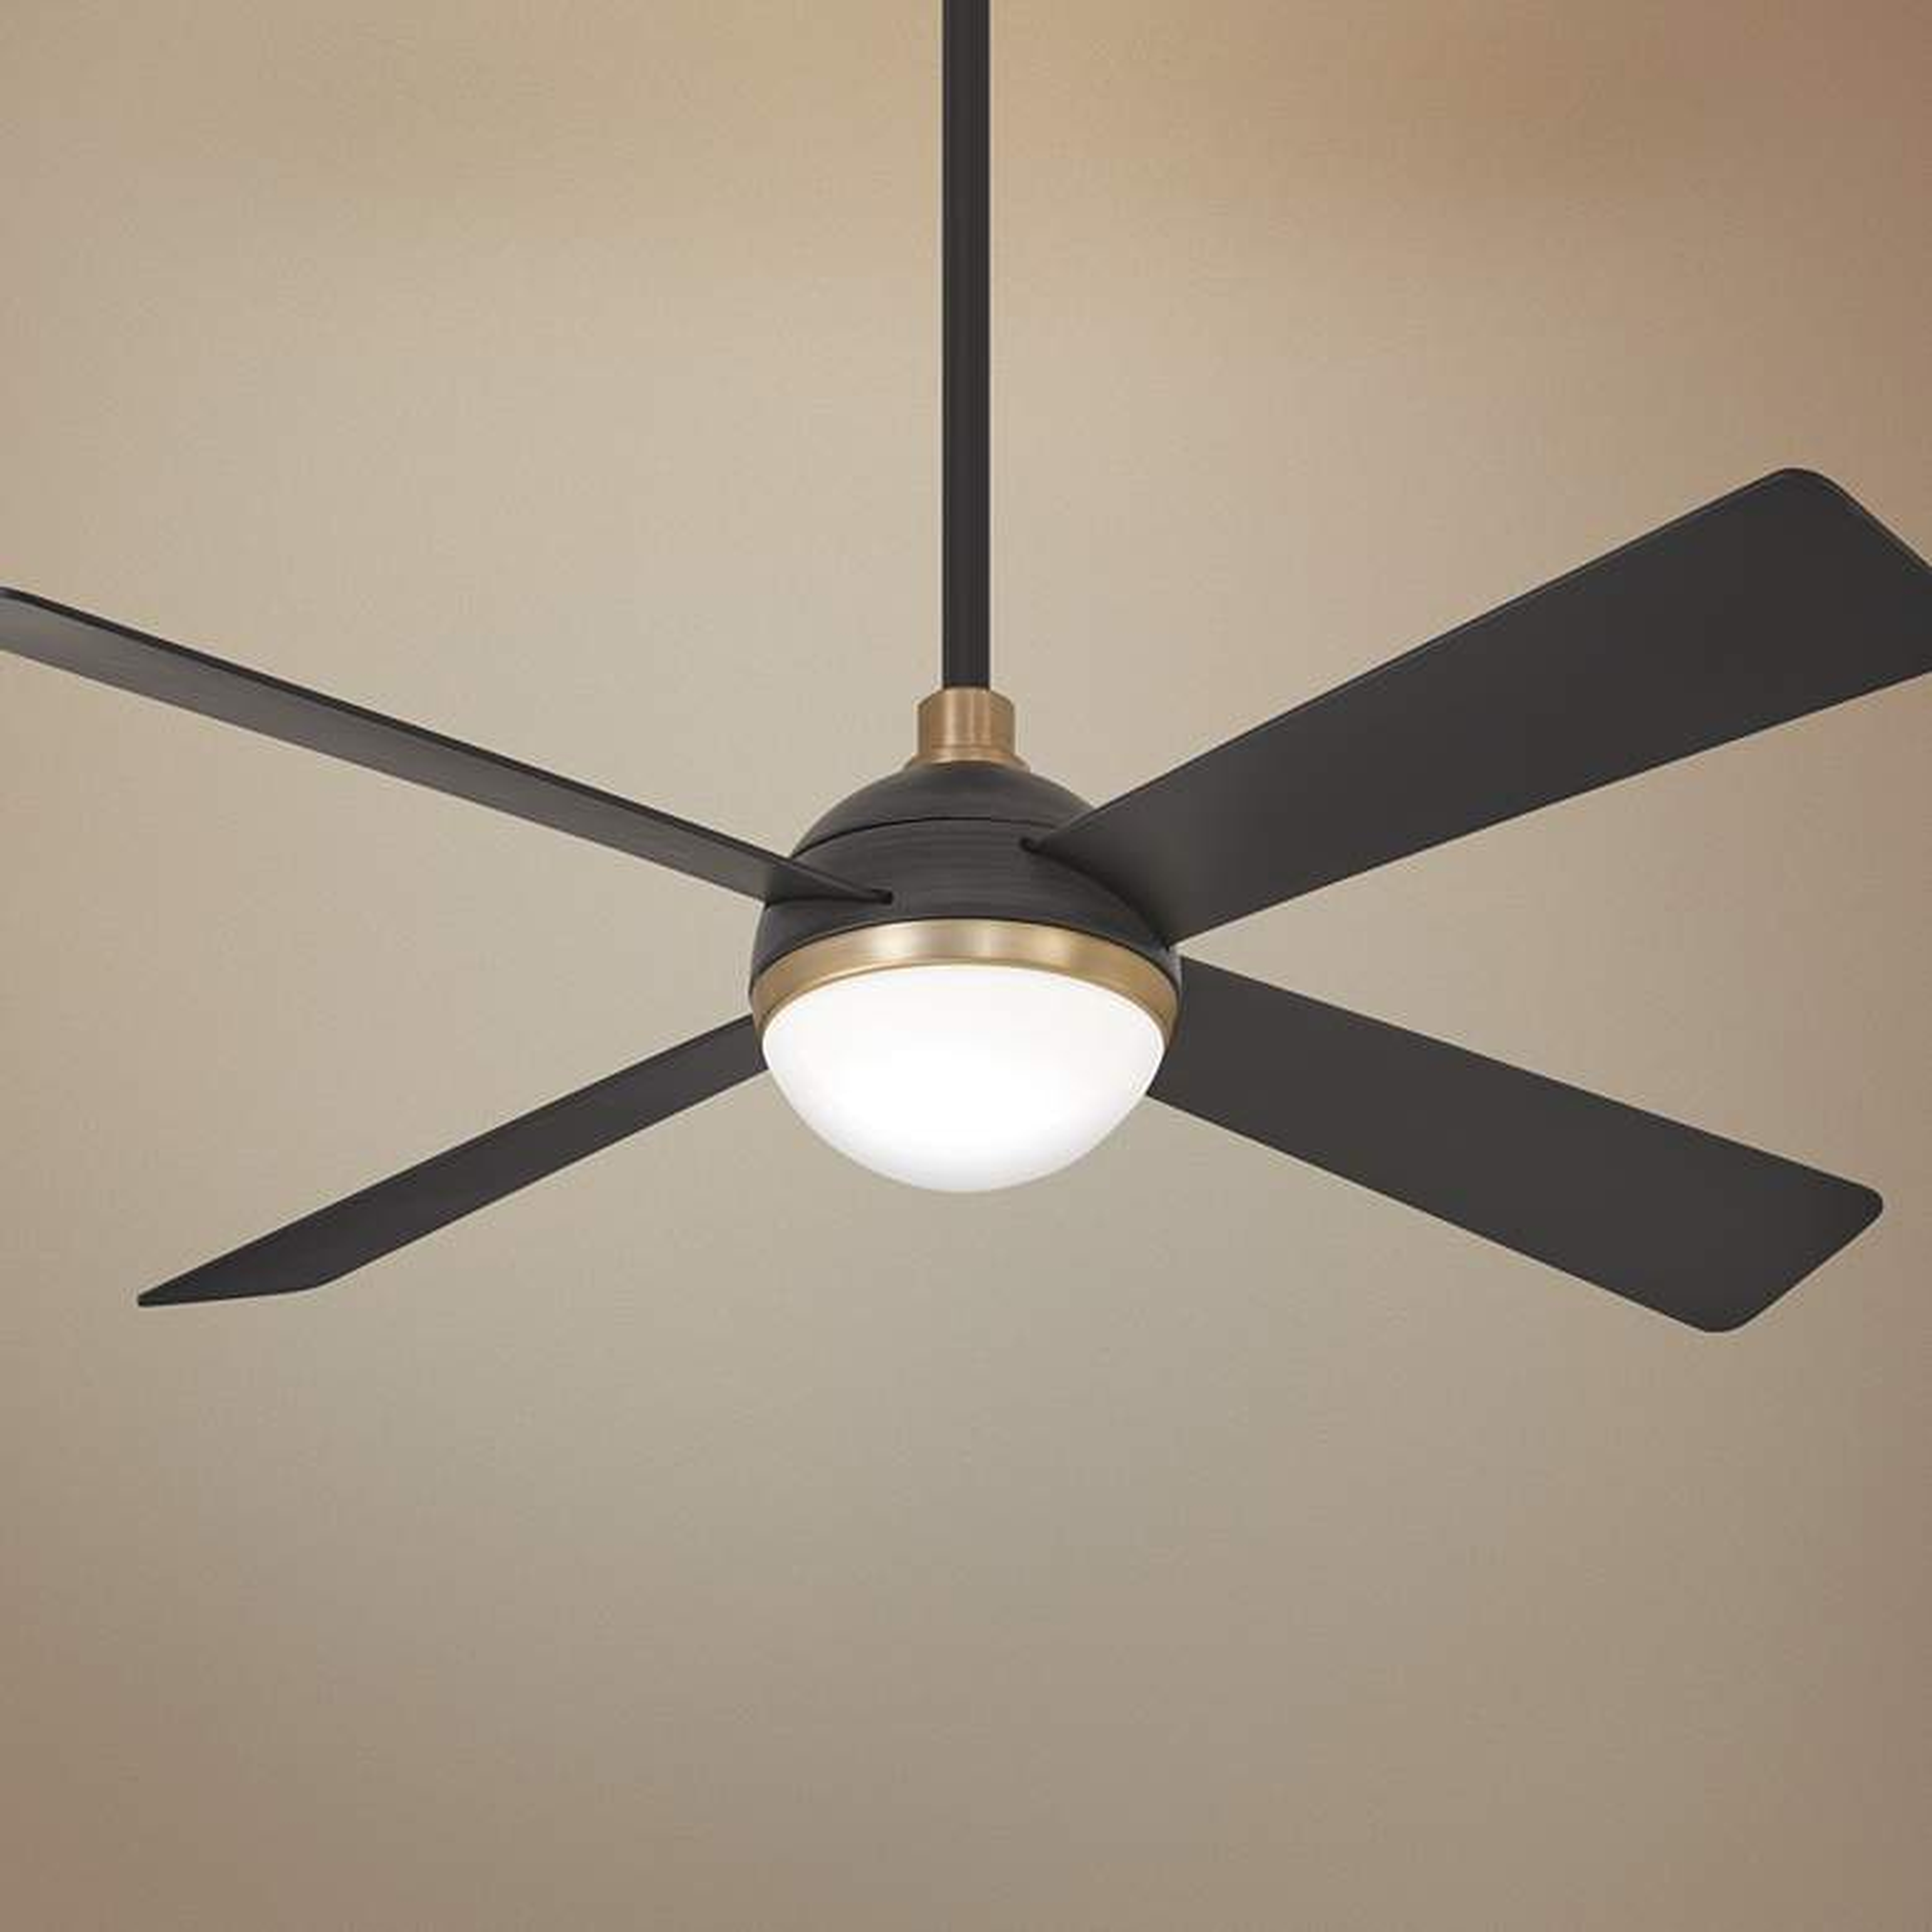 54" Minka Aire Orb Brushed Carbon LED Ceiling Fan - Lamps Plus